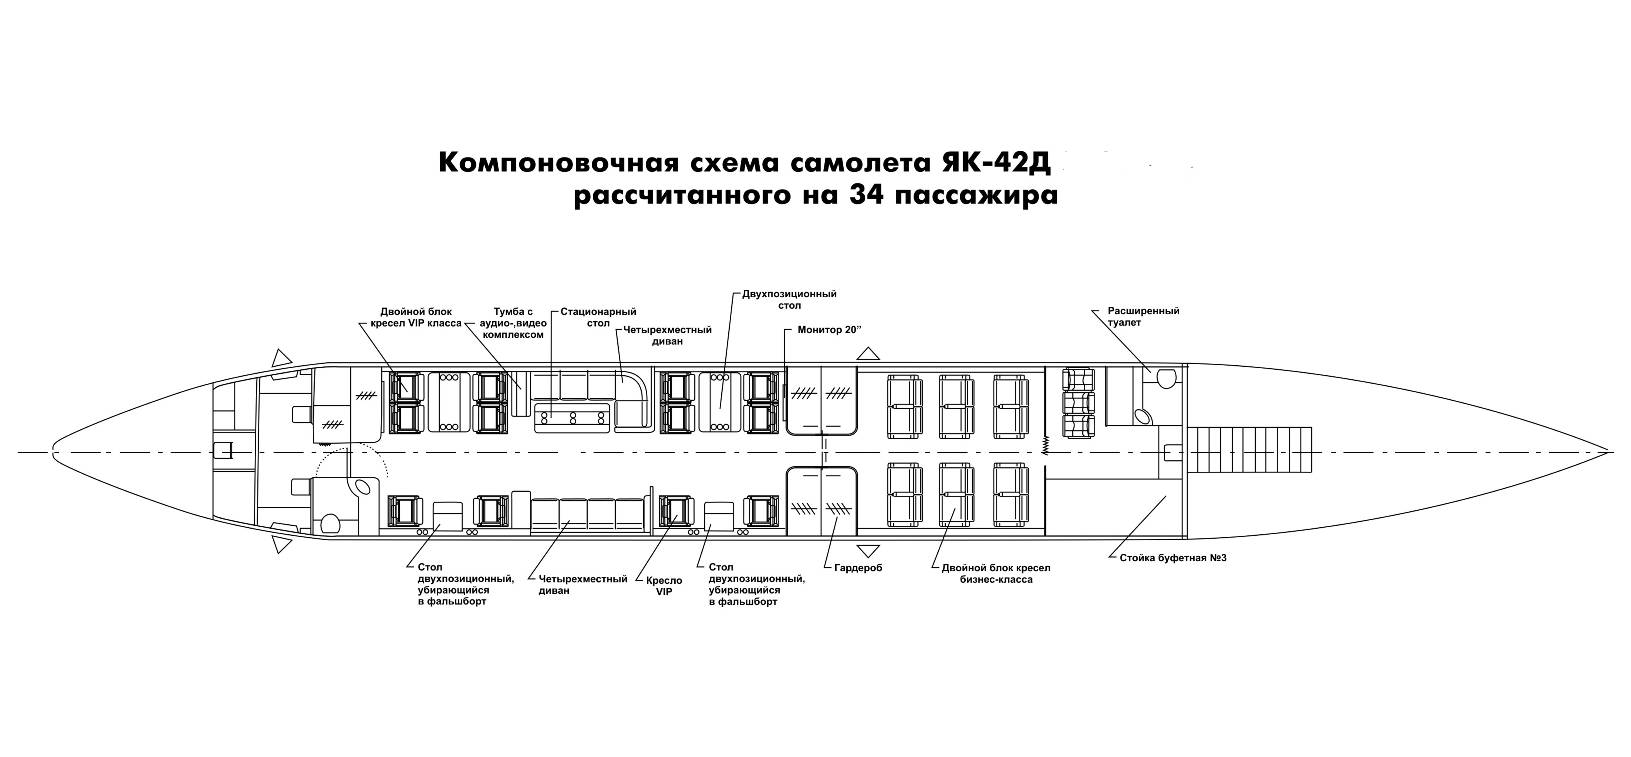 Яковлев як-40 - yakovlev yak-40